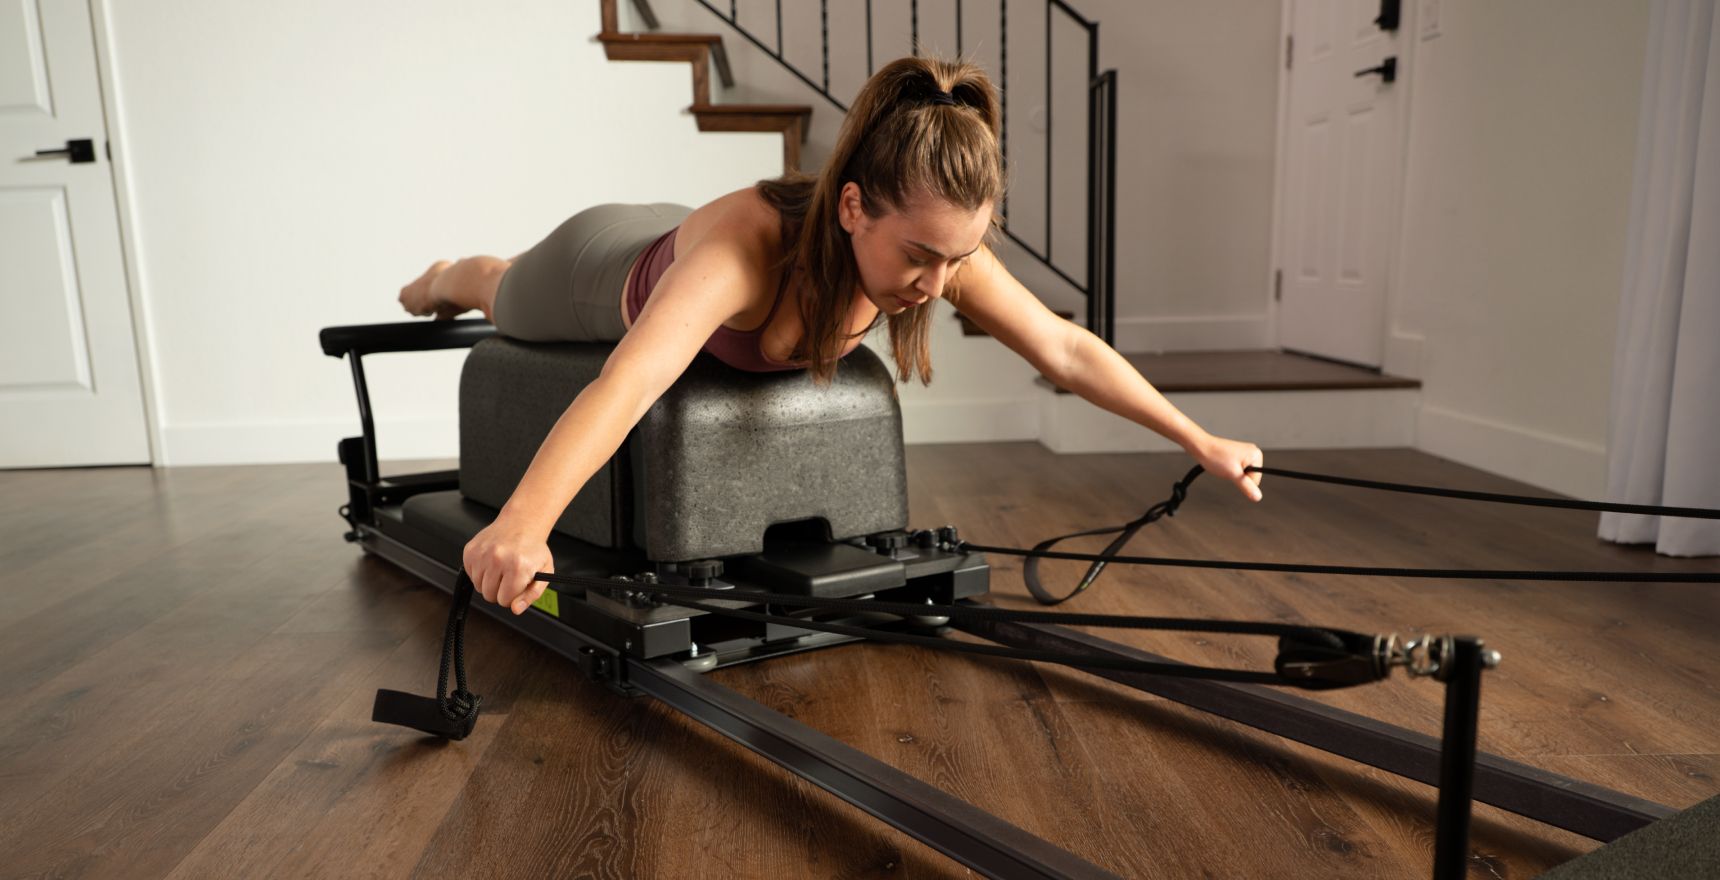 Pilates Reformer Machine  Portable Pilates Equipment for Home Use